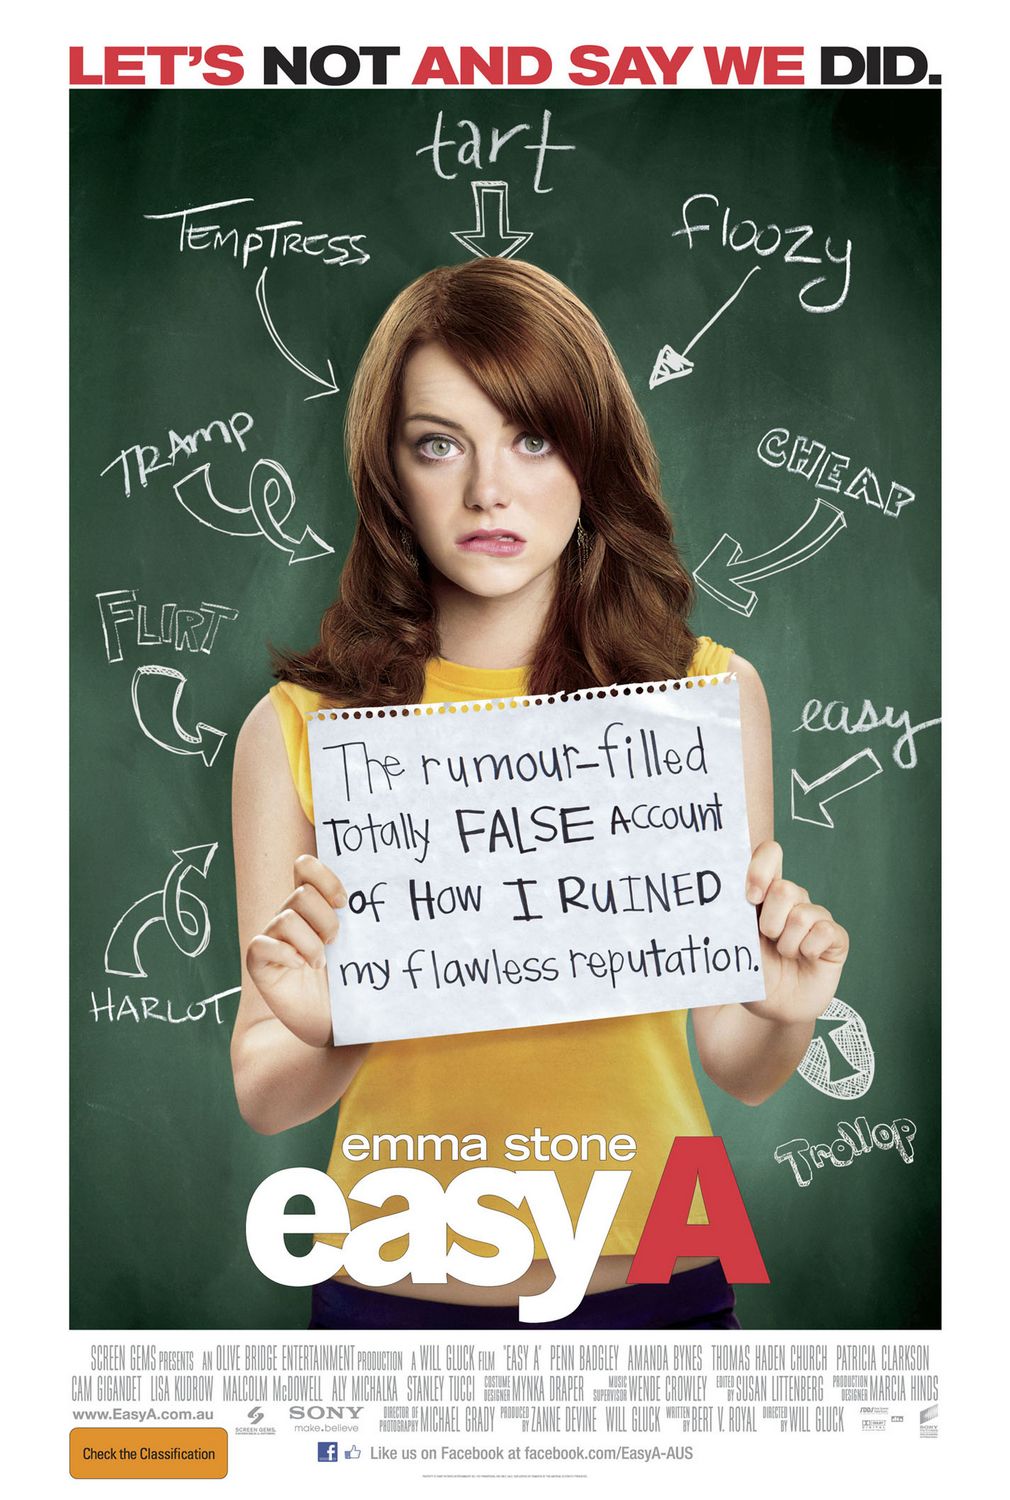  Easy A (2010) | Emma Stone